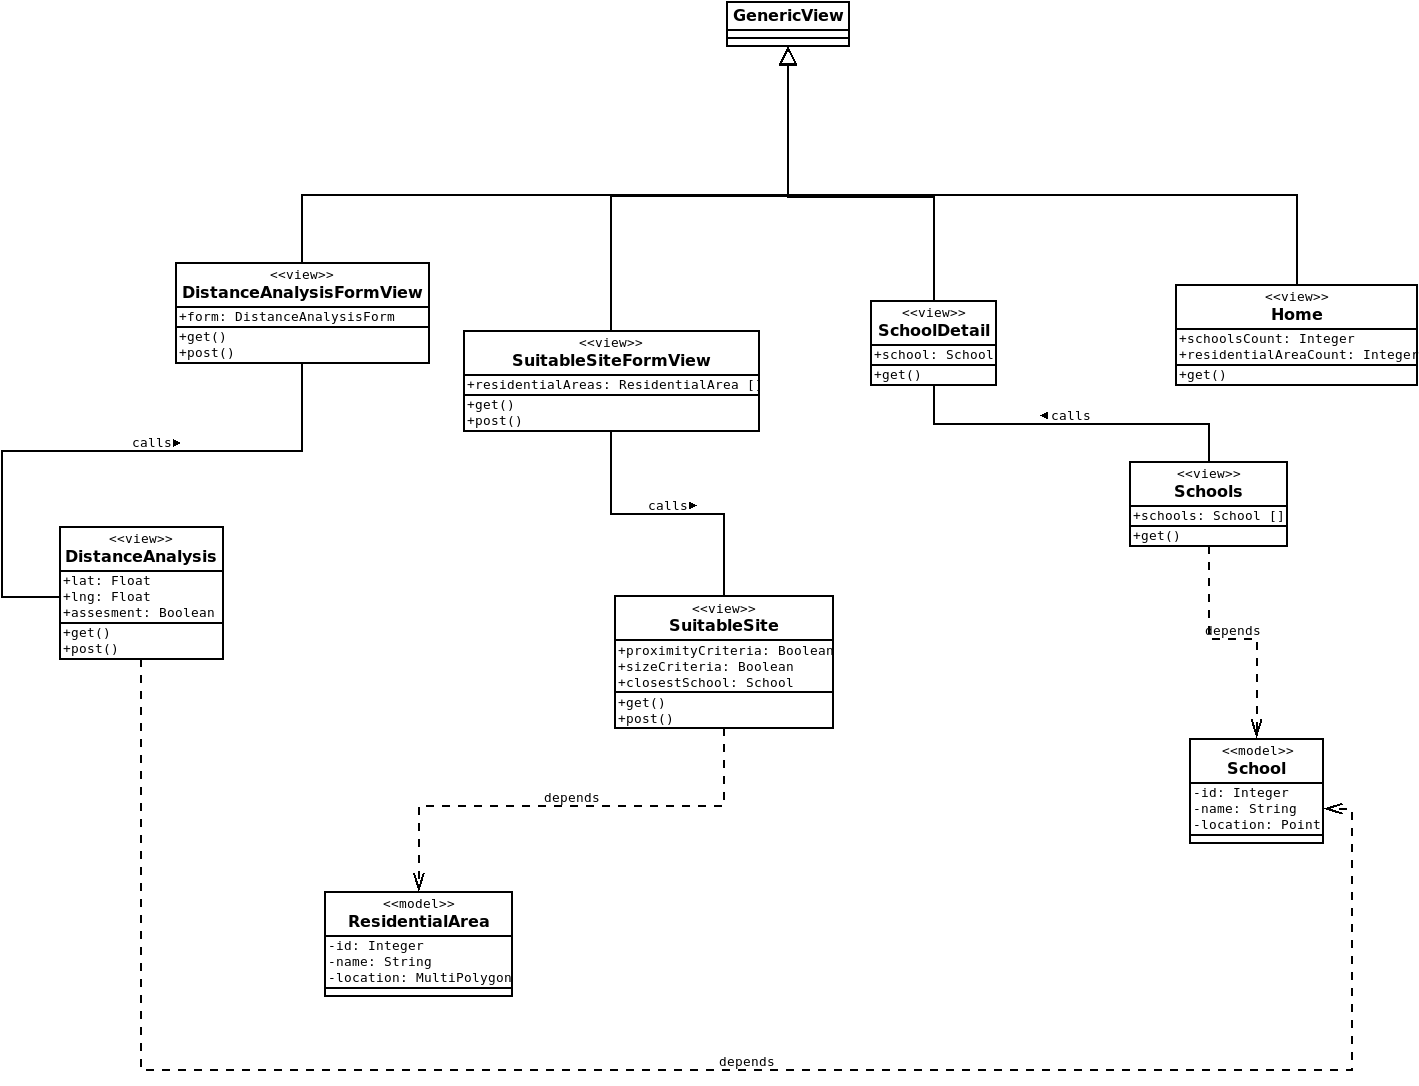 UML class diagram of the application